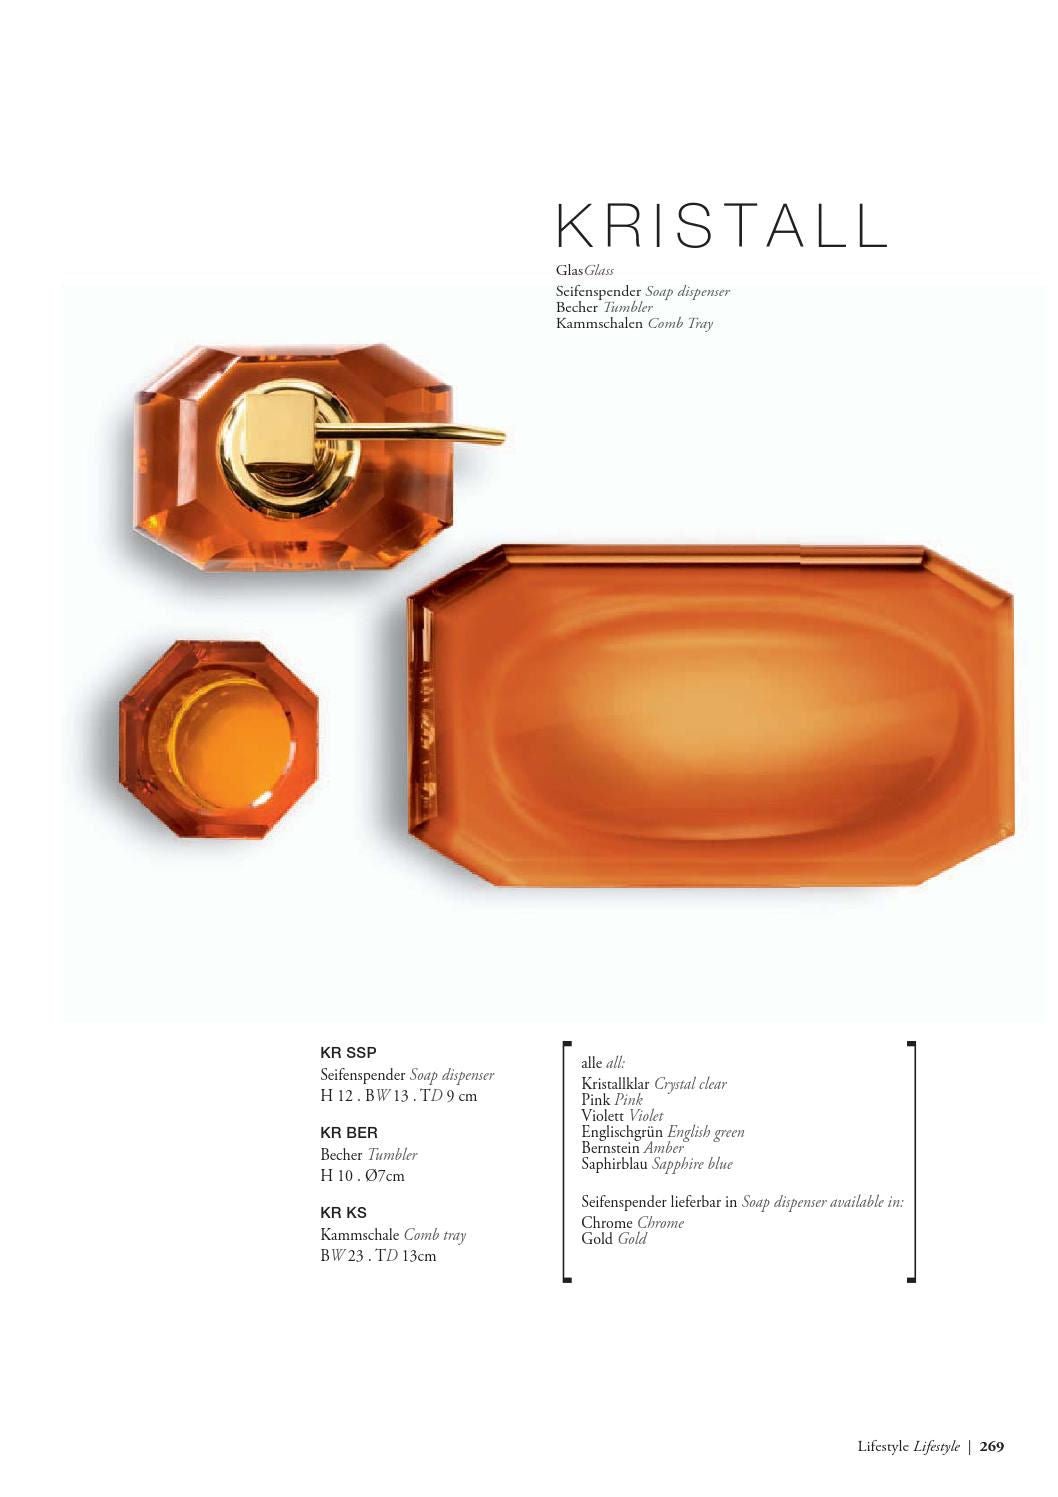 Luxury Shiny Gold Crystal Liquid Soap Glass Dispenser | Amber - |VESIMI Design| Luxury Bathrooms and Home Decor